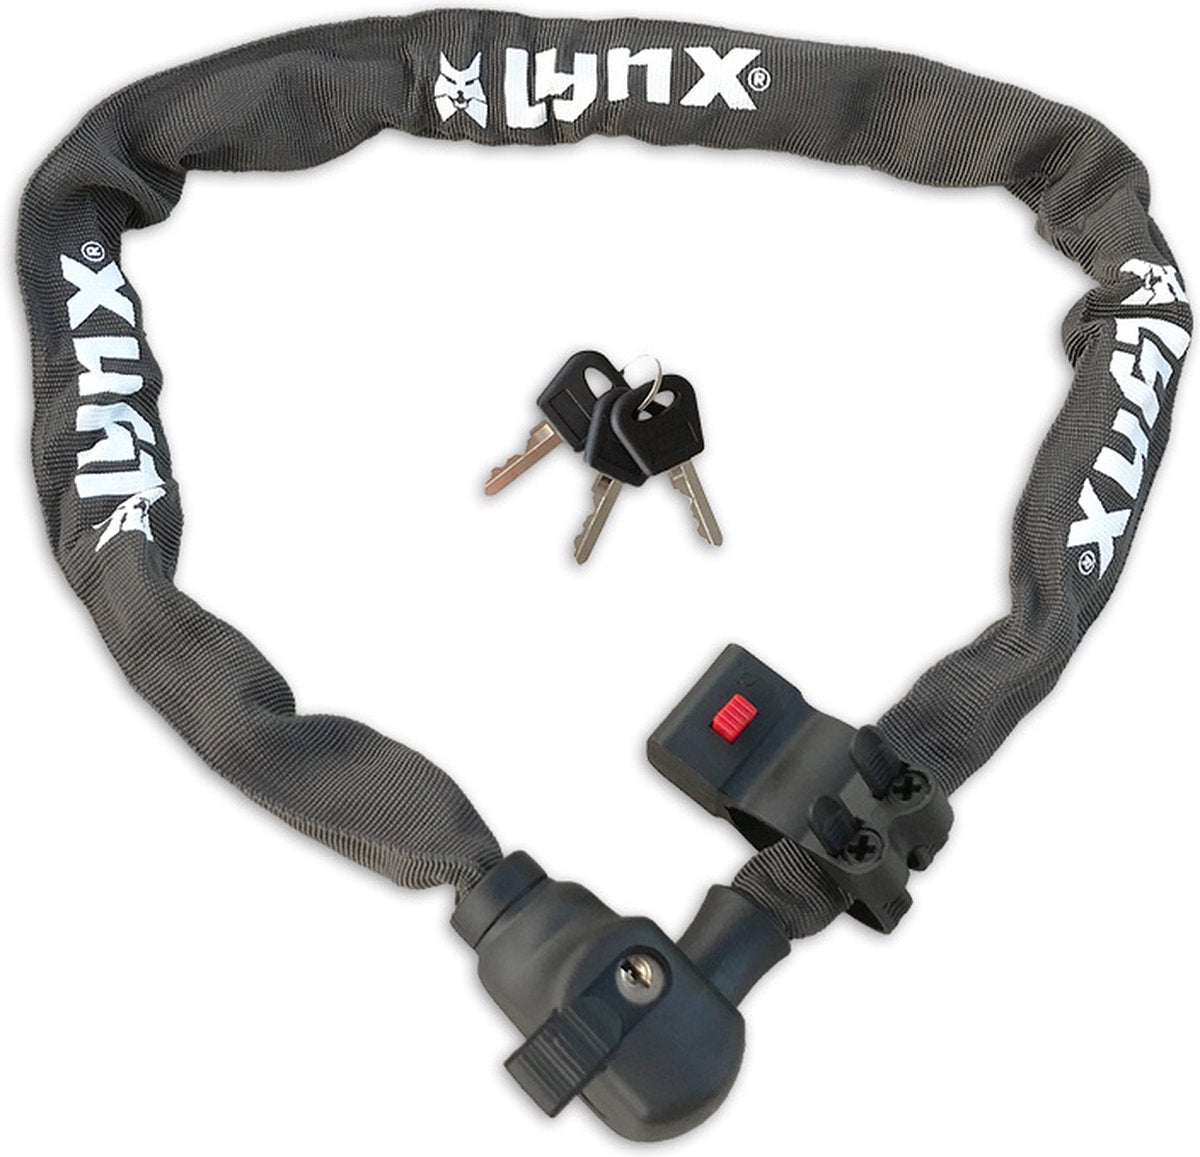 fiets slot - Lynx kettingslot 5.5x100cm, grijs met houder incl 3 sleutels